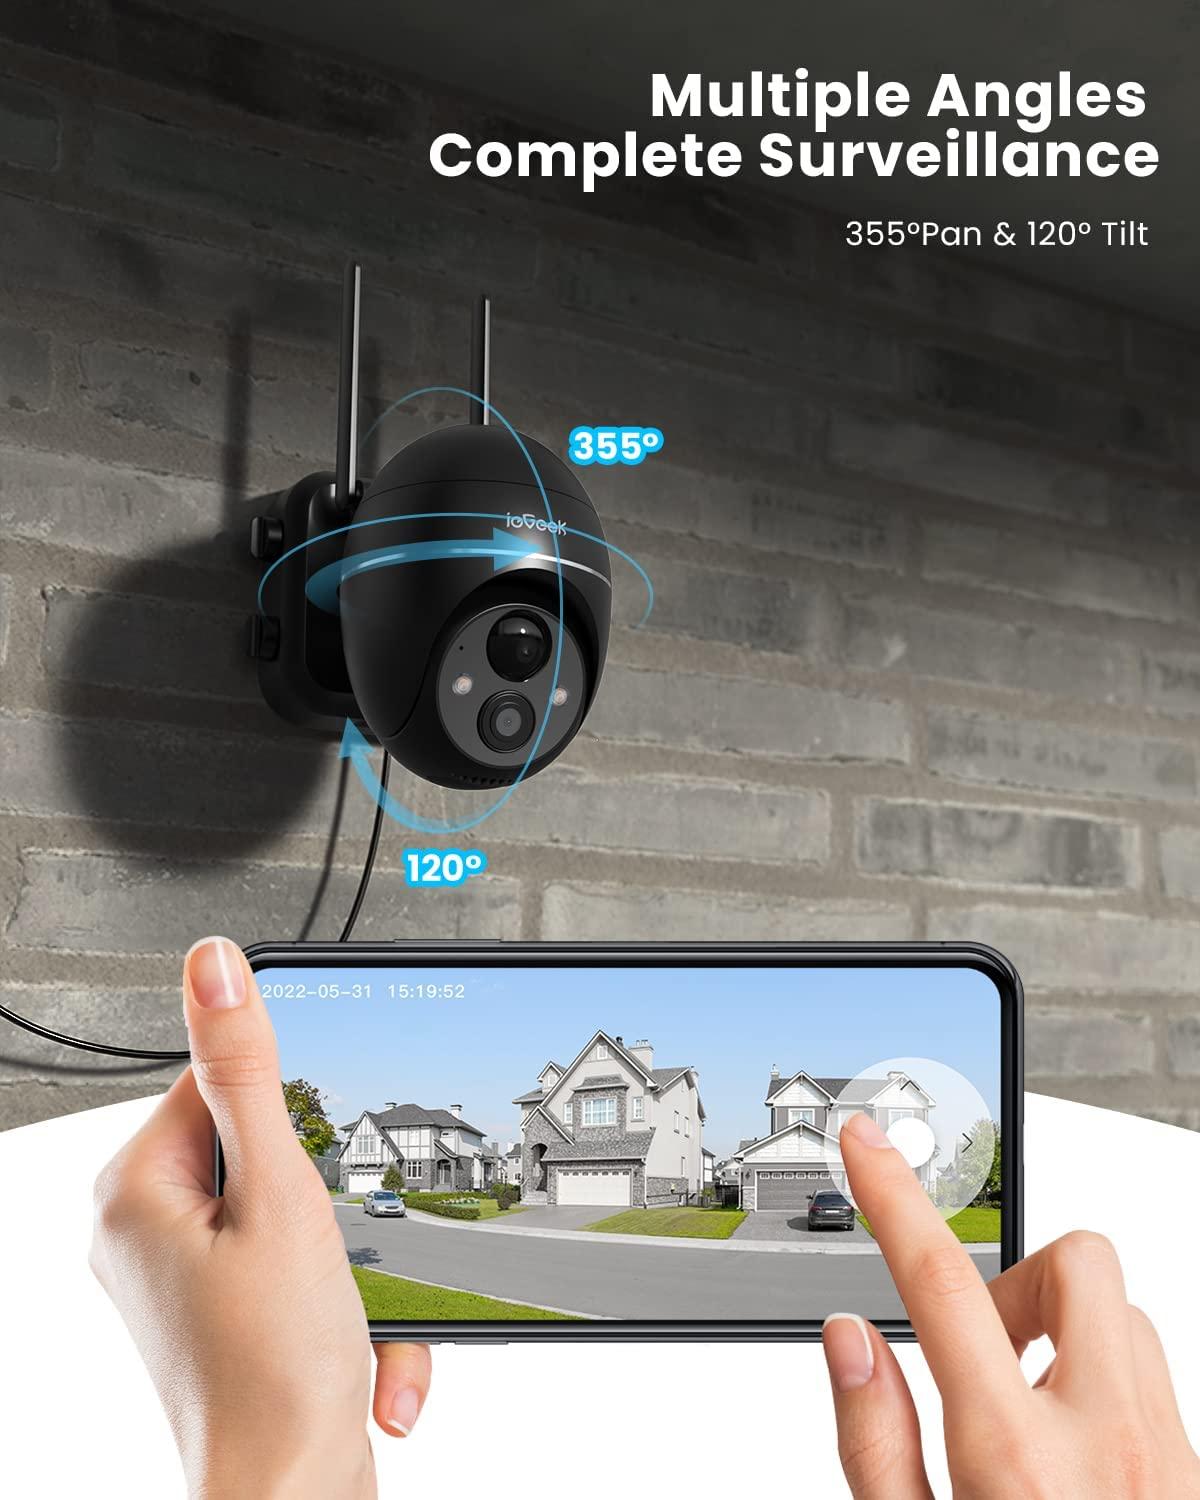 Home Security Cameras & Wireless Camera Systems